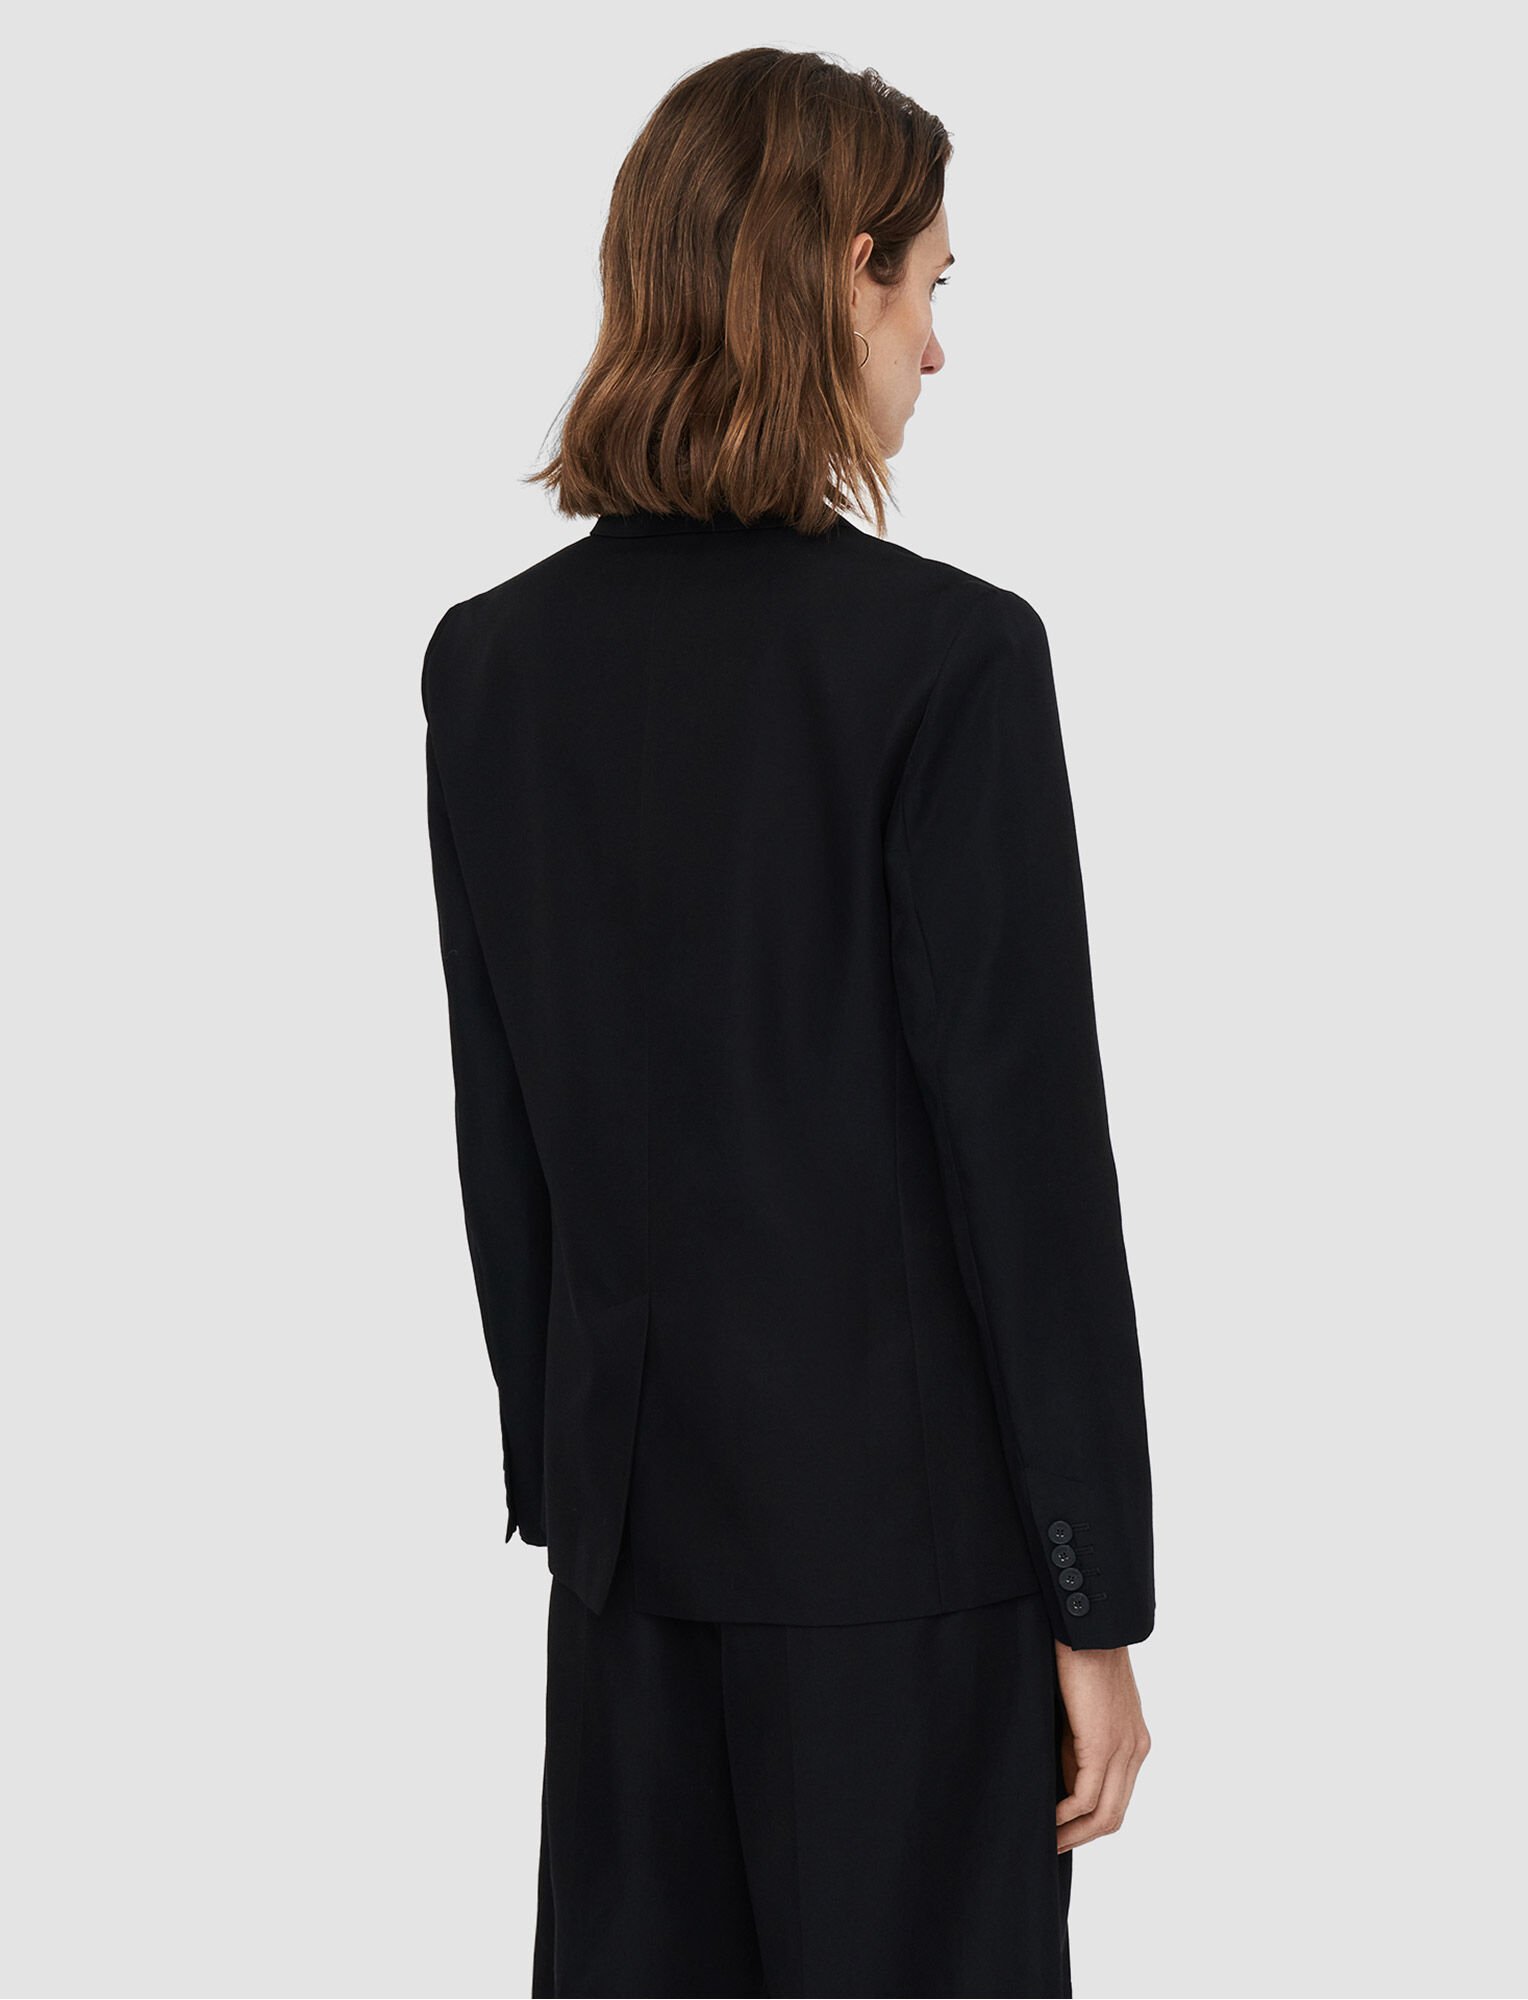 Joseph, Soft Cotton Silk Belmore Jacket, in Black